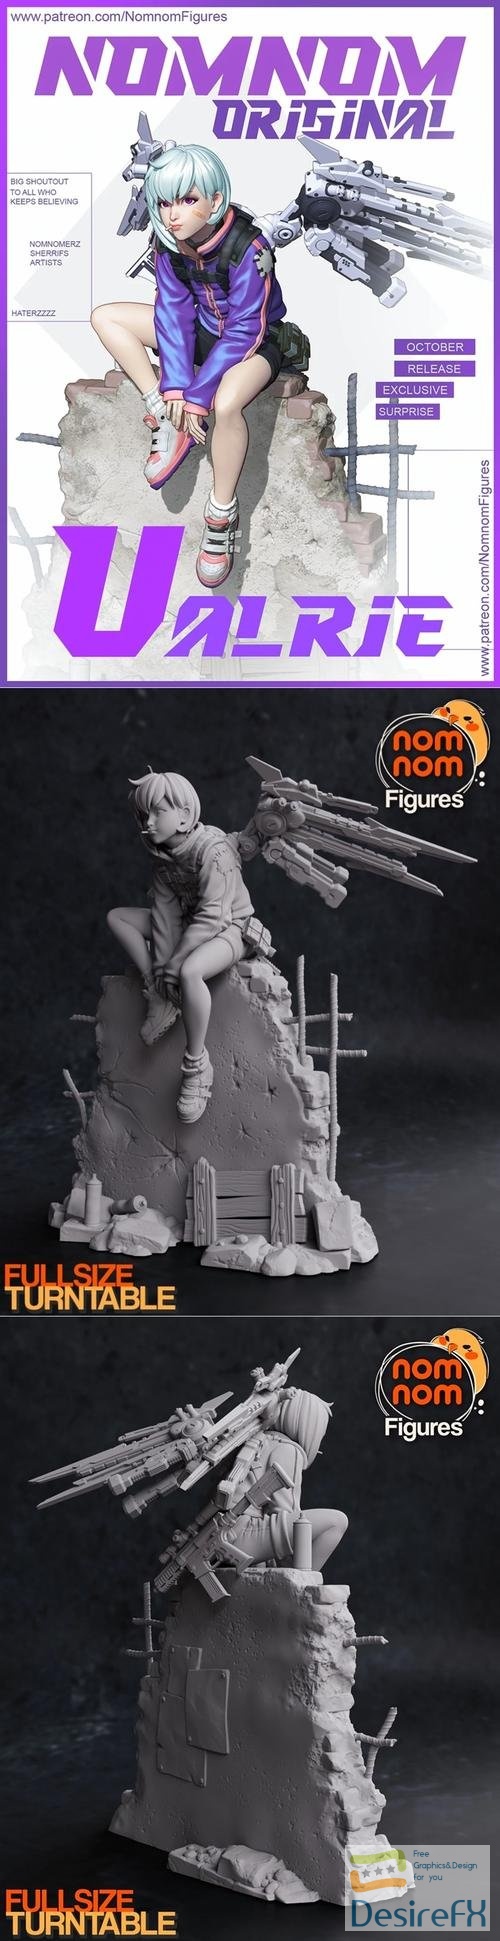 Valrie - NomNom Figures – 3D Print